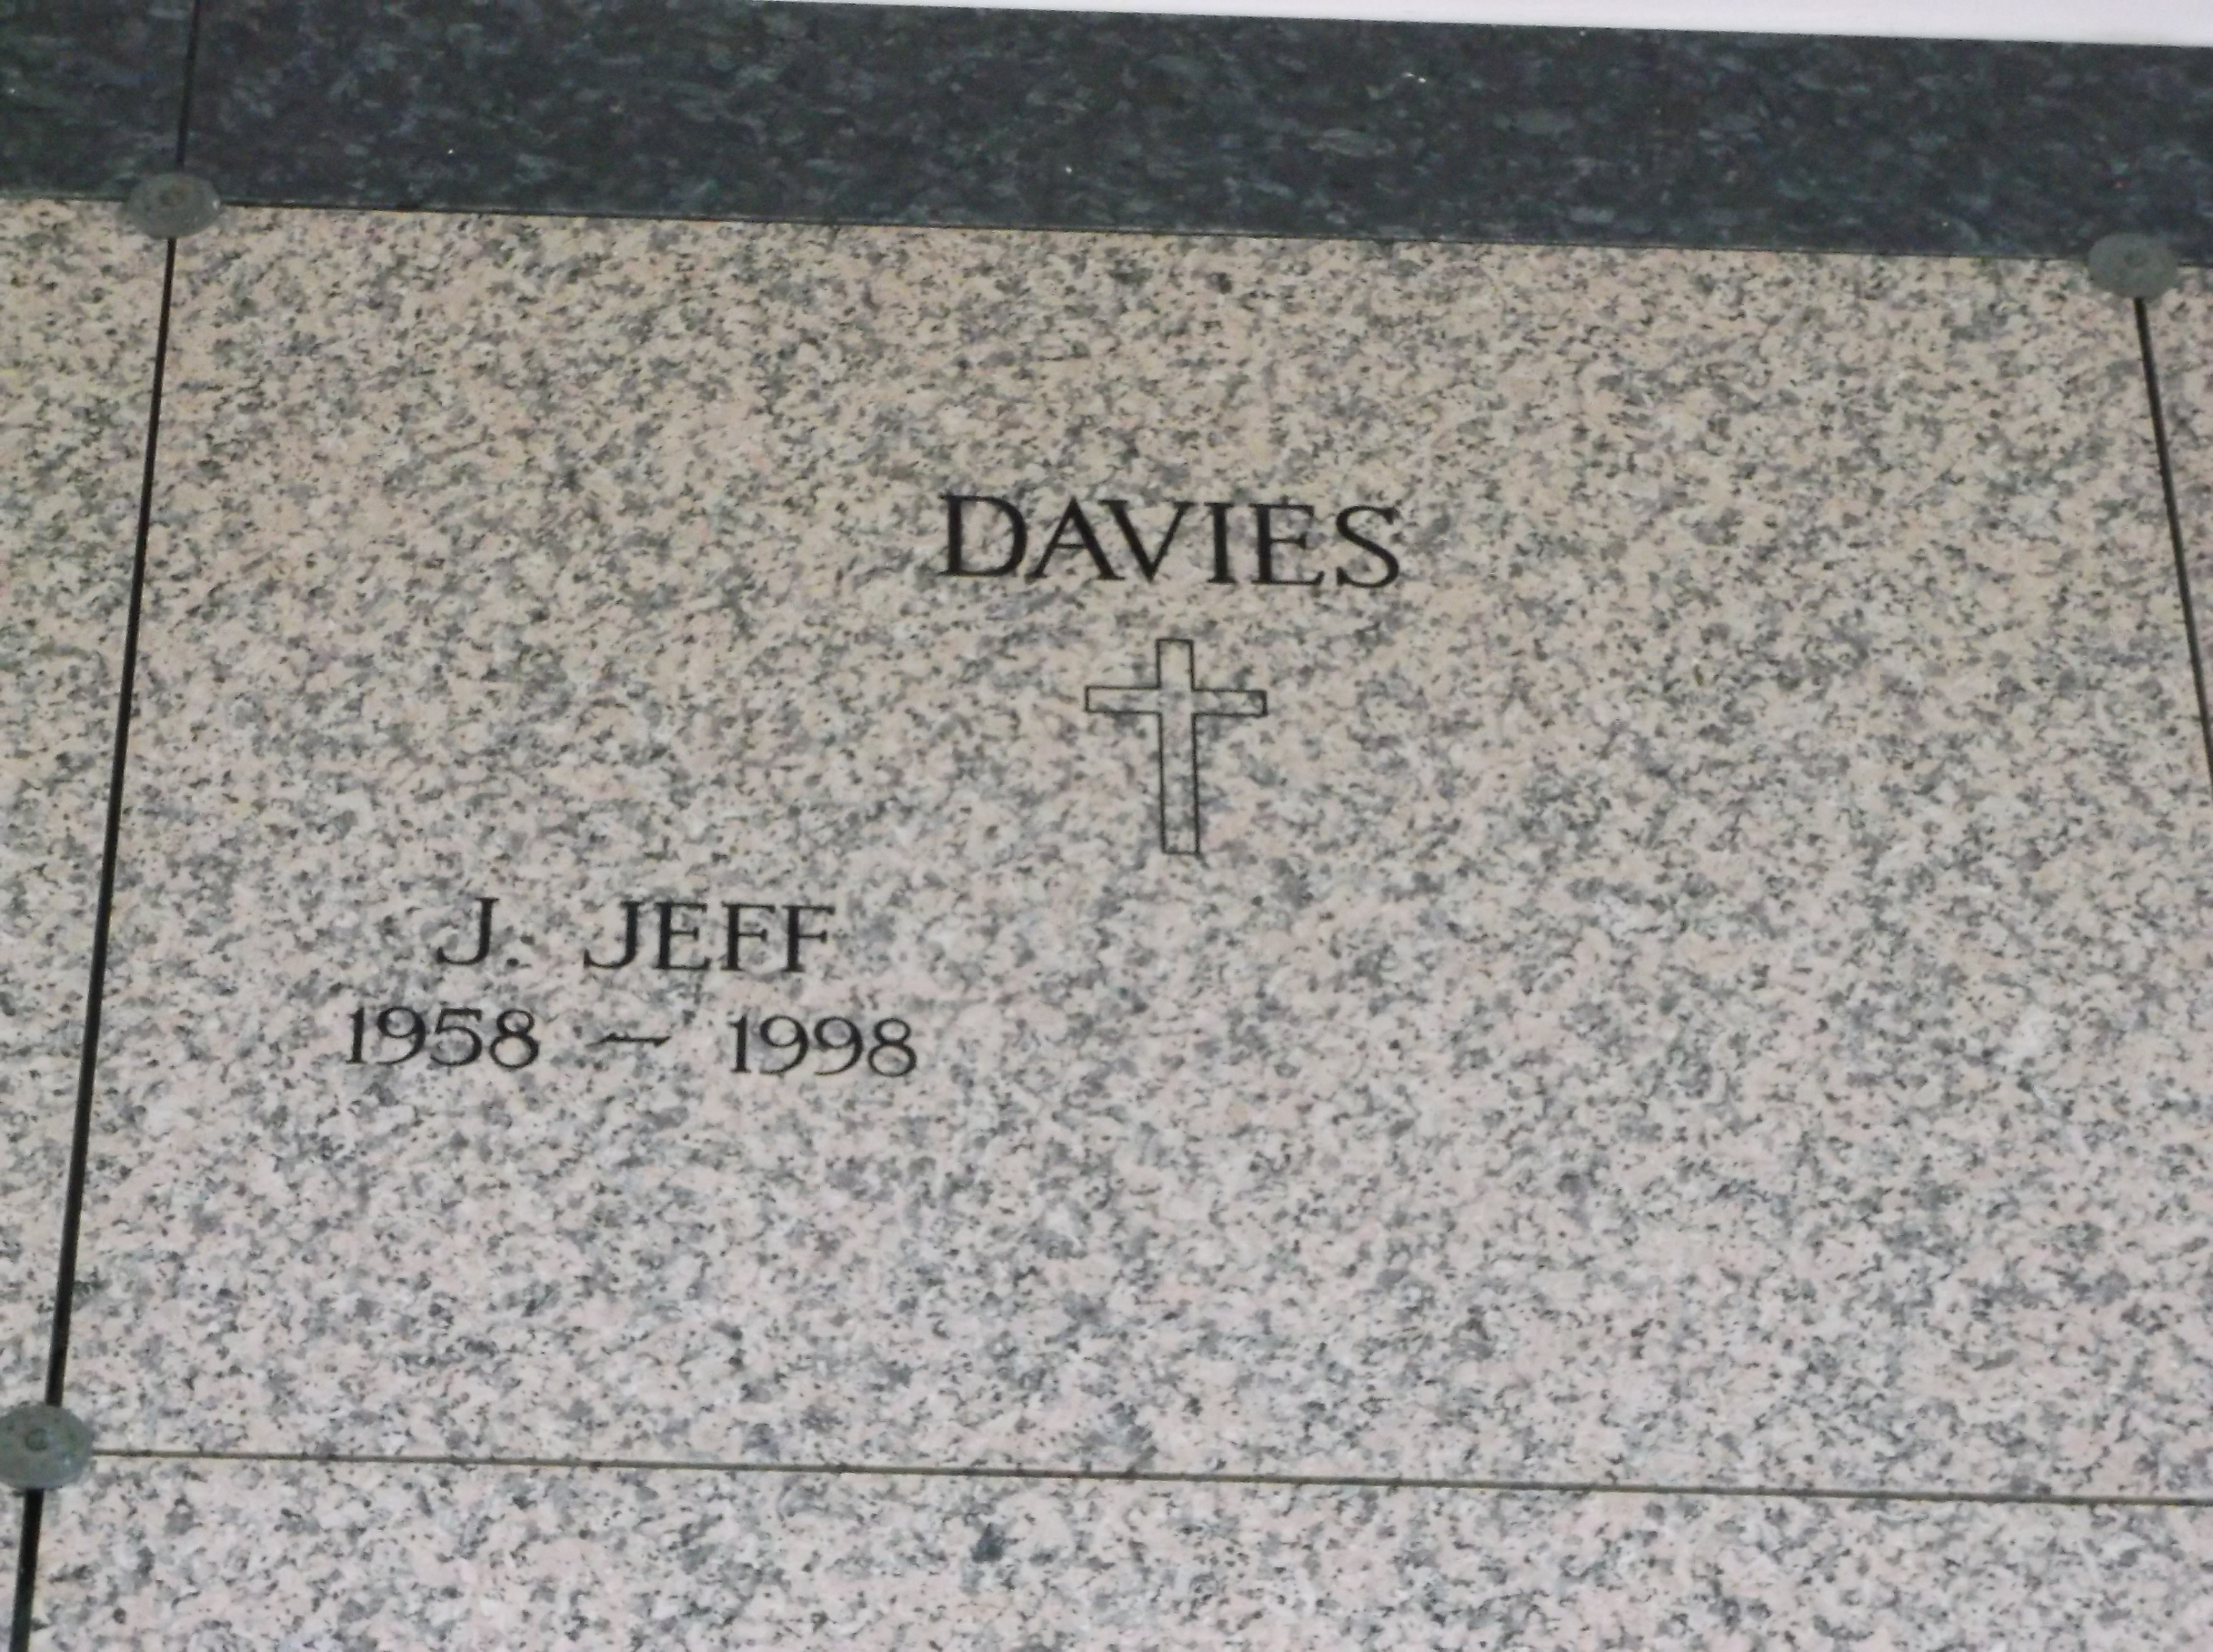 J Jeff Davies